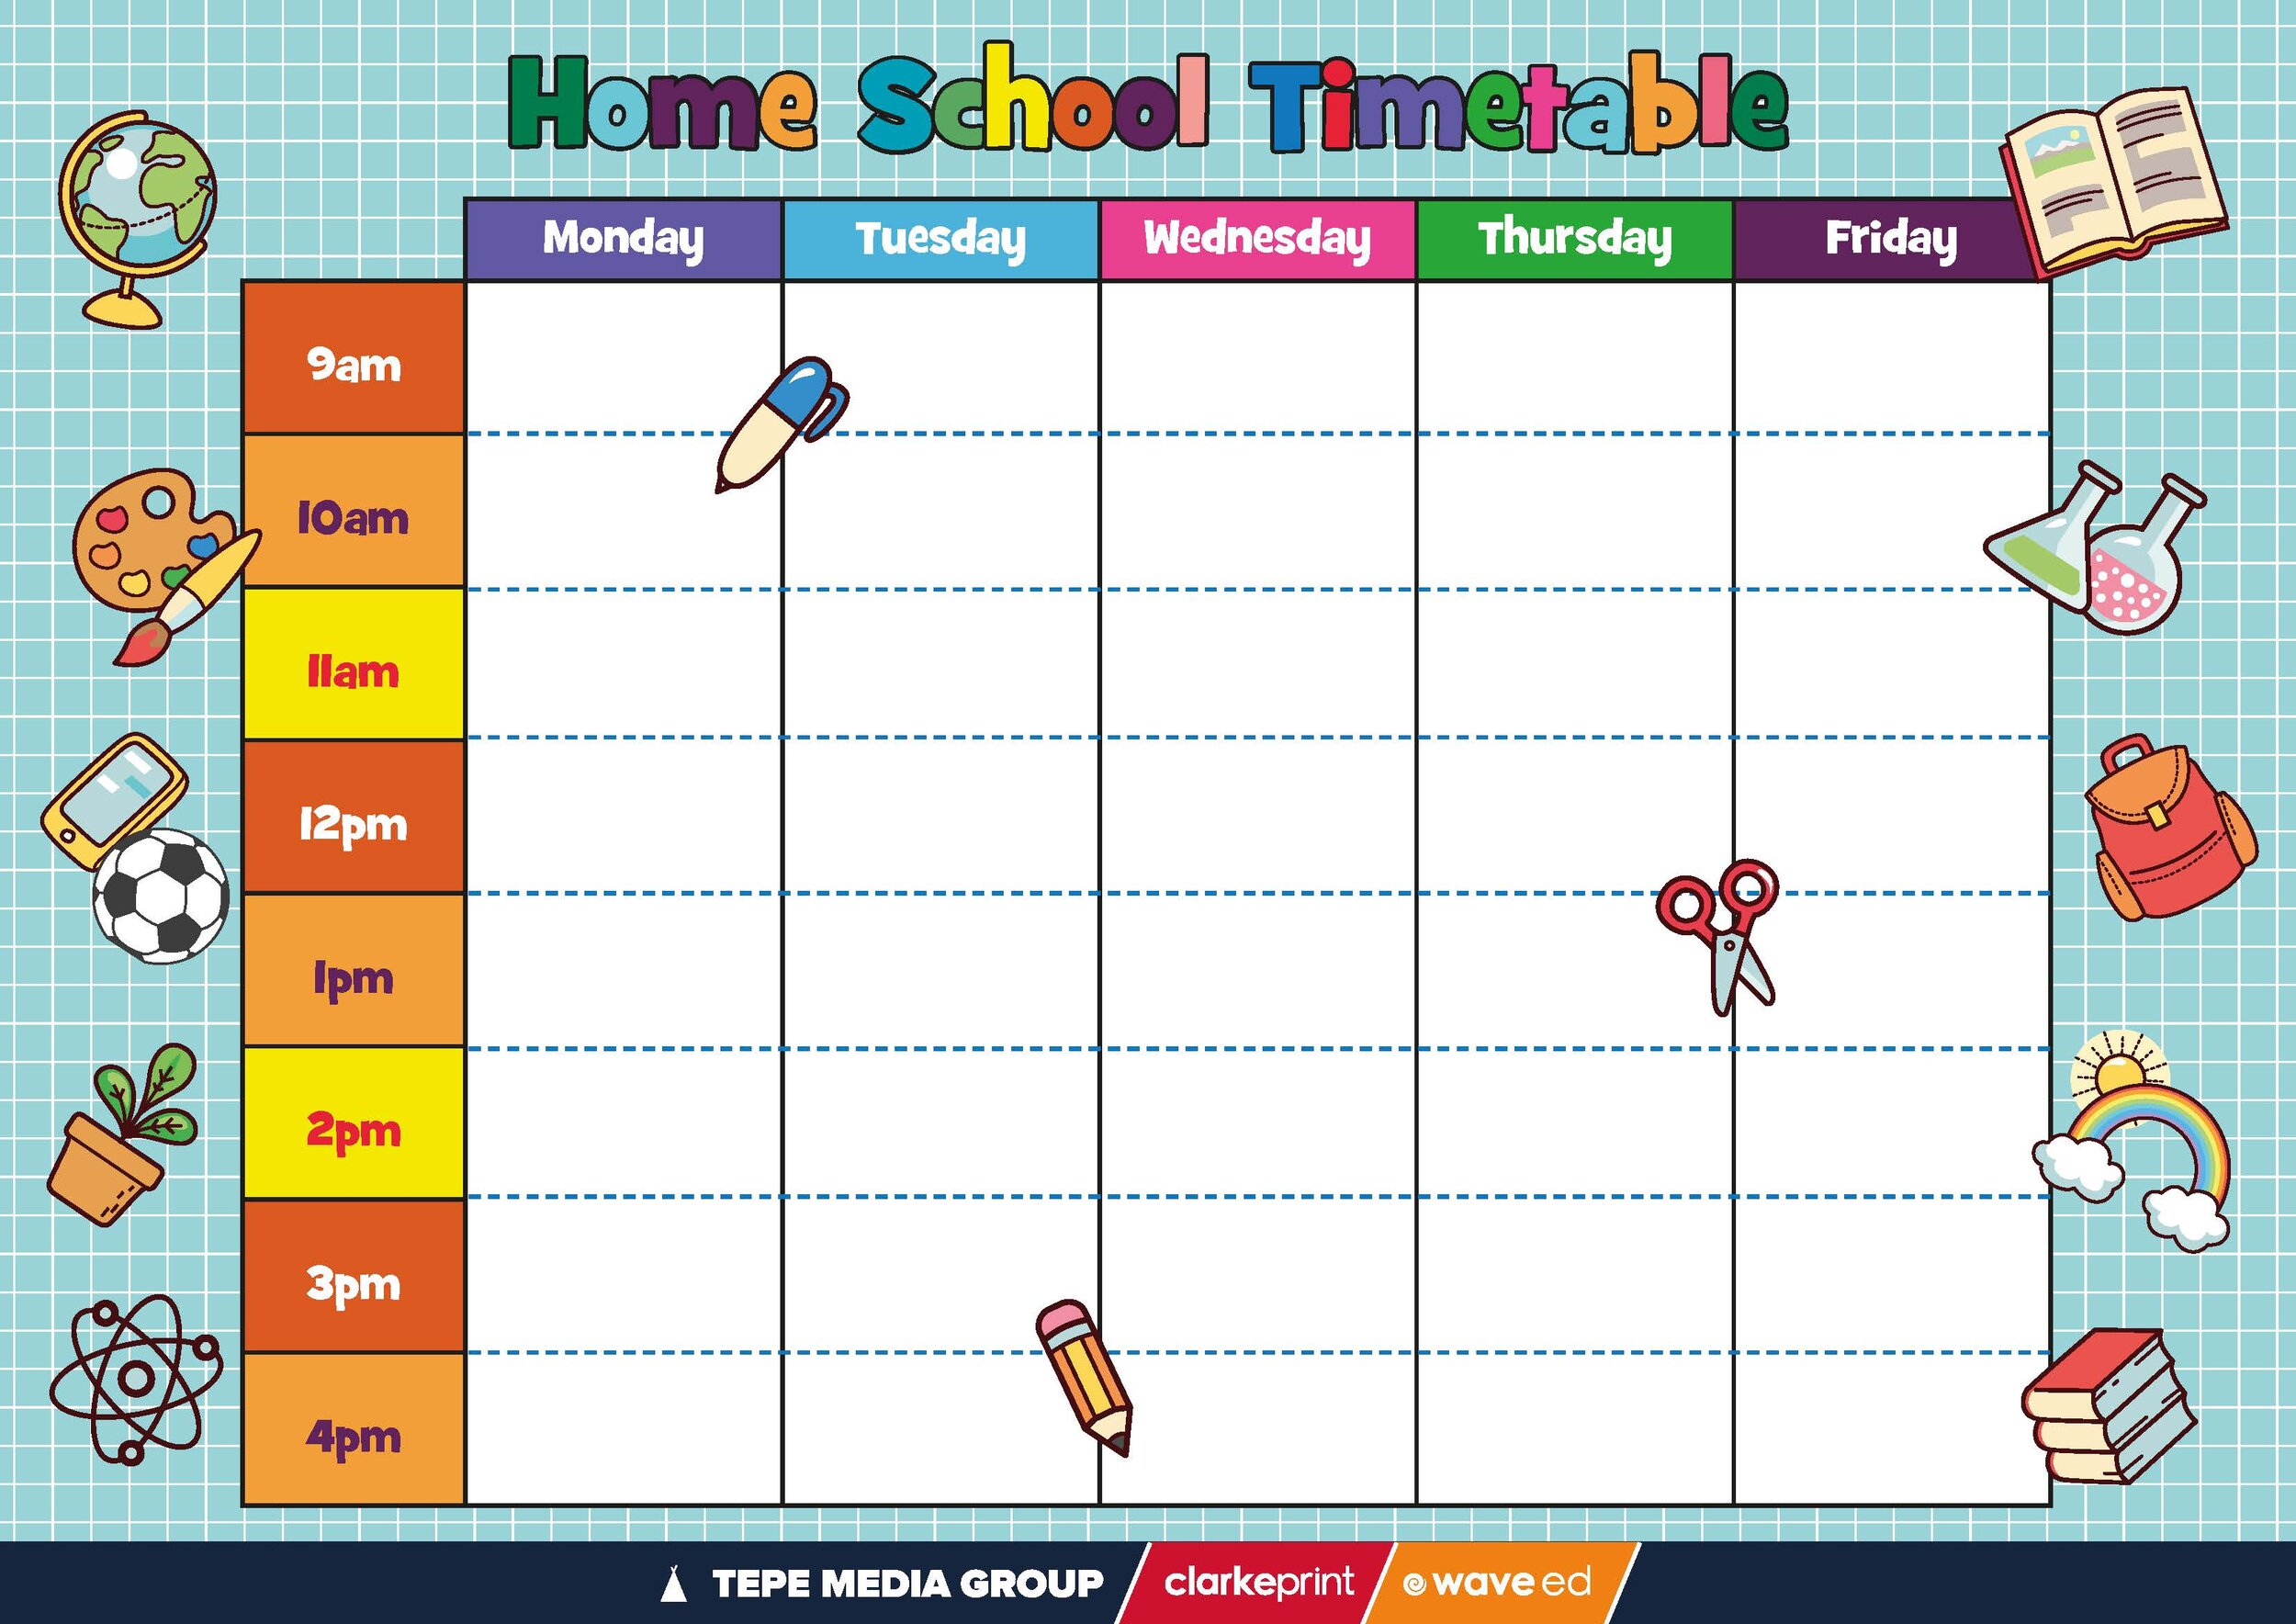 homework timetable for school